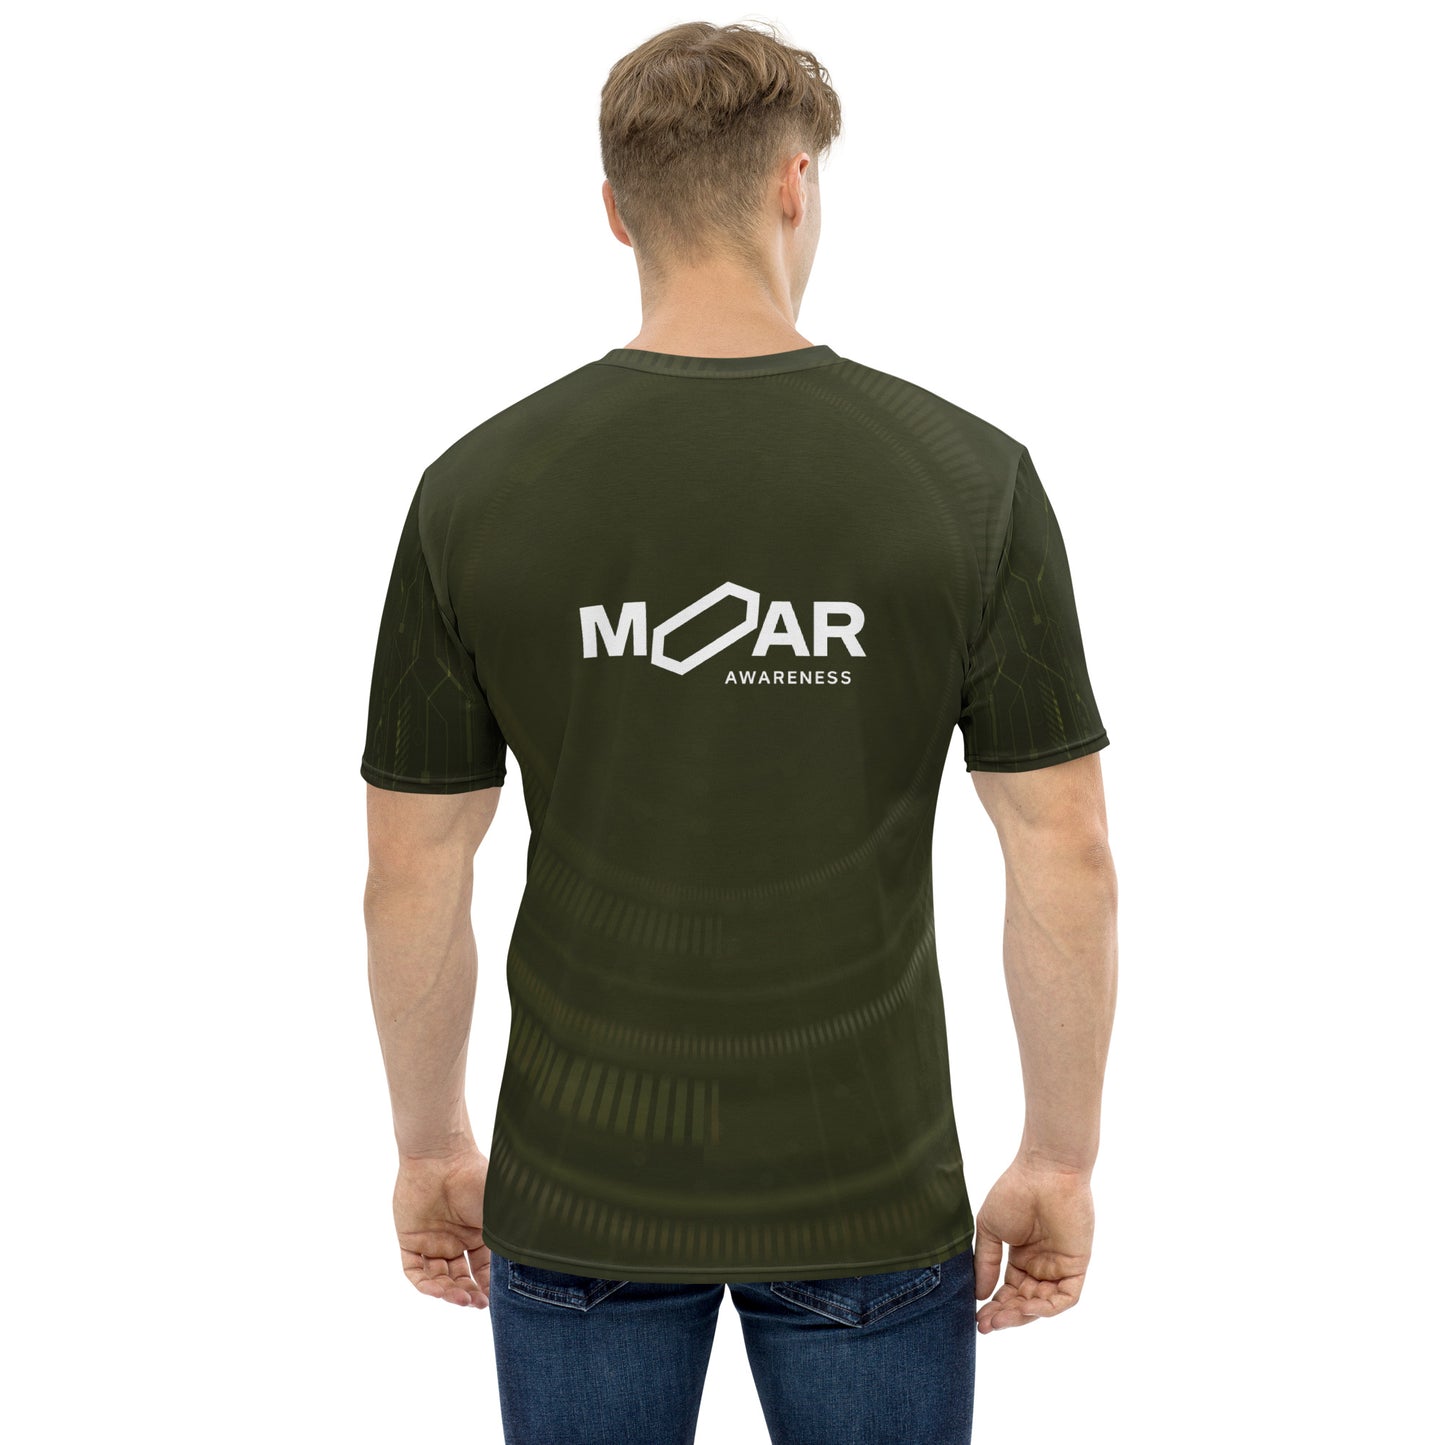 Ethereum Crypto Shirt | Men's t-shirt & Apparel | Crypto Casey Clothing